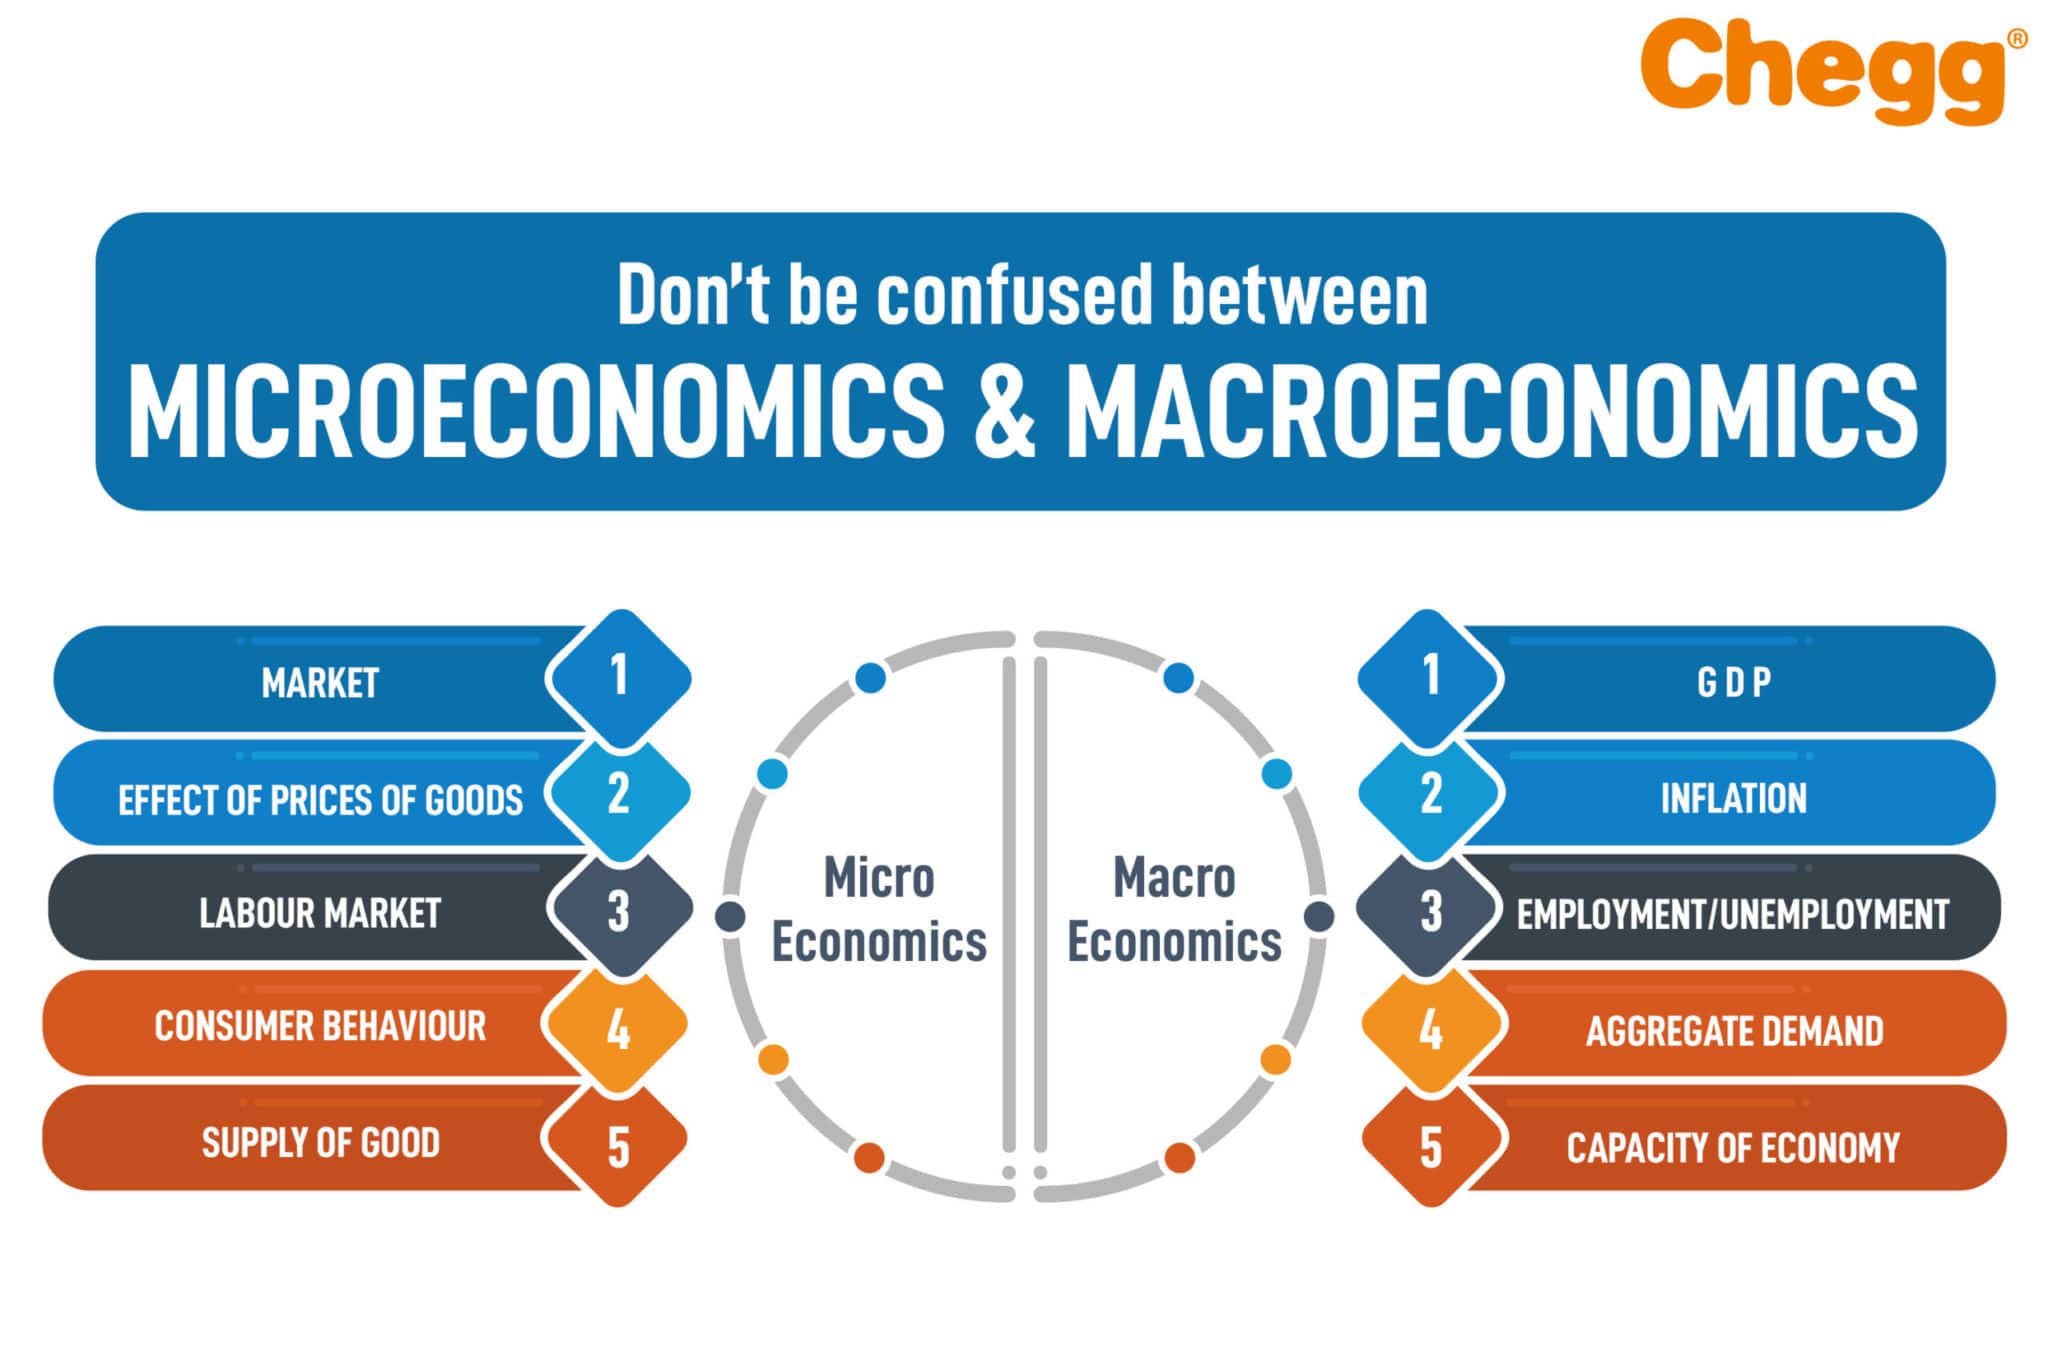 Jobs related to microeconomics